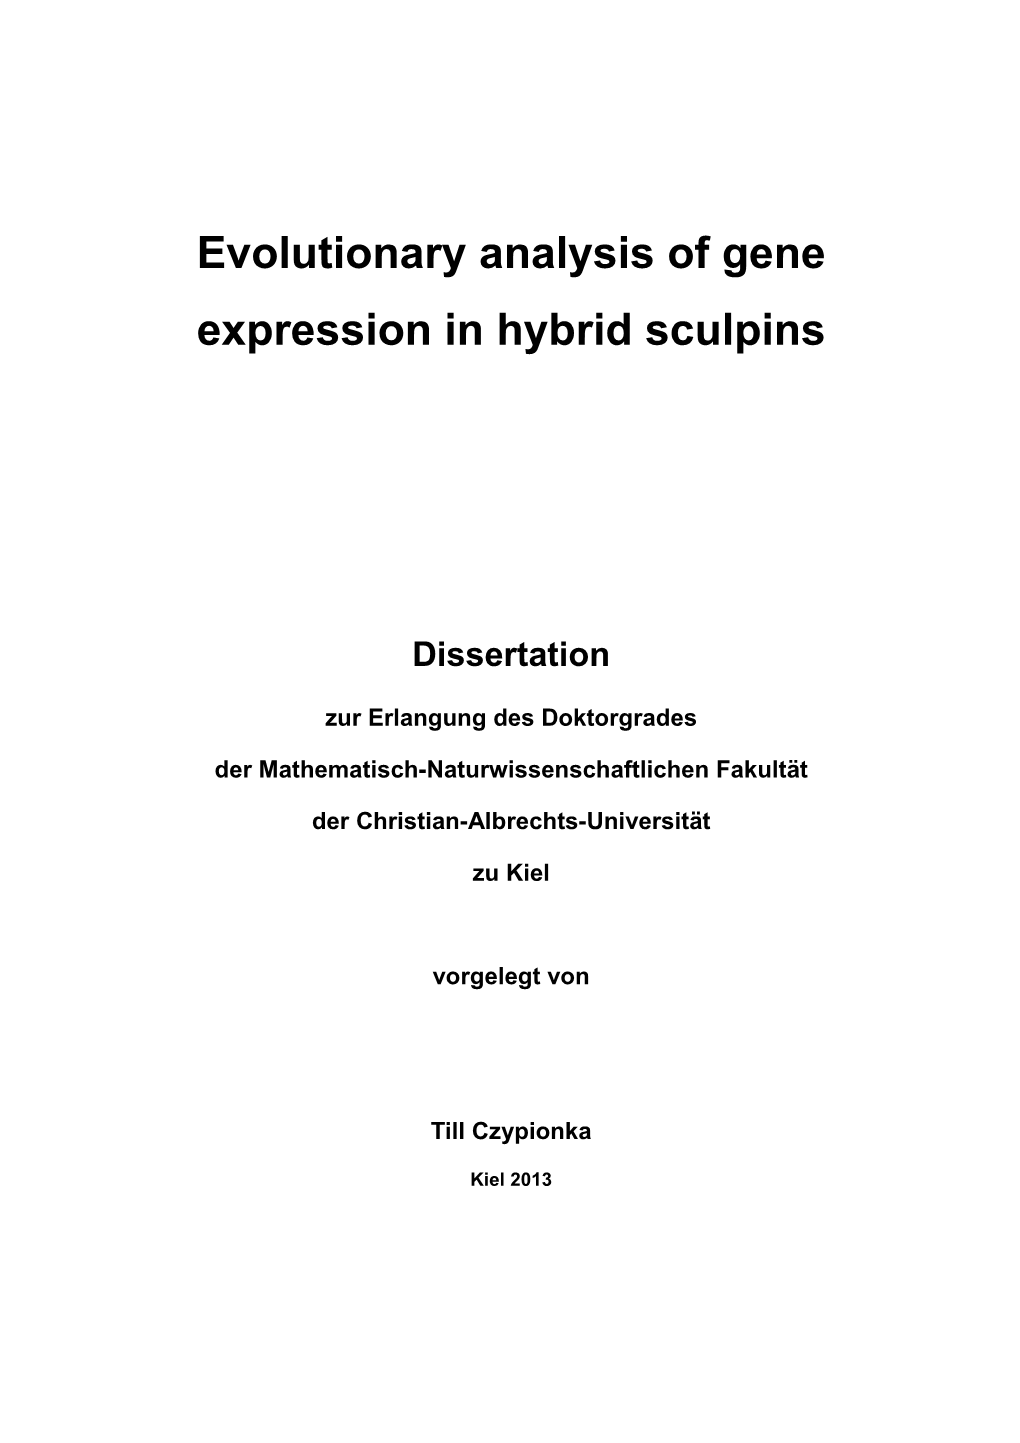 Evolutionary Analysis of Gene Expression in Hybrid Sculpins